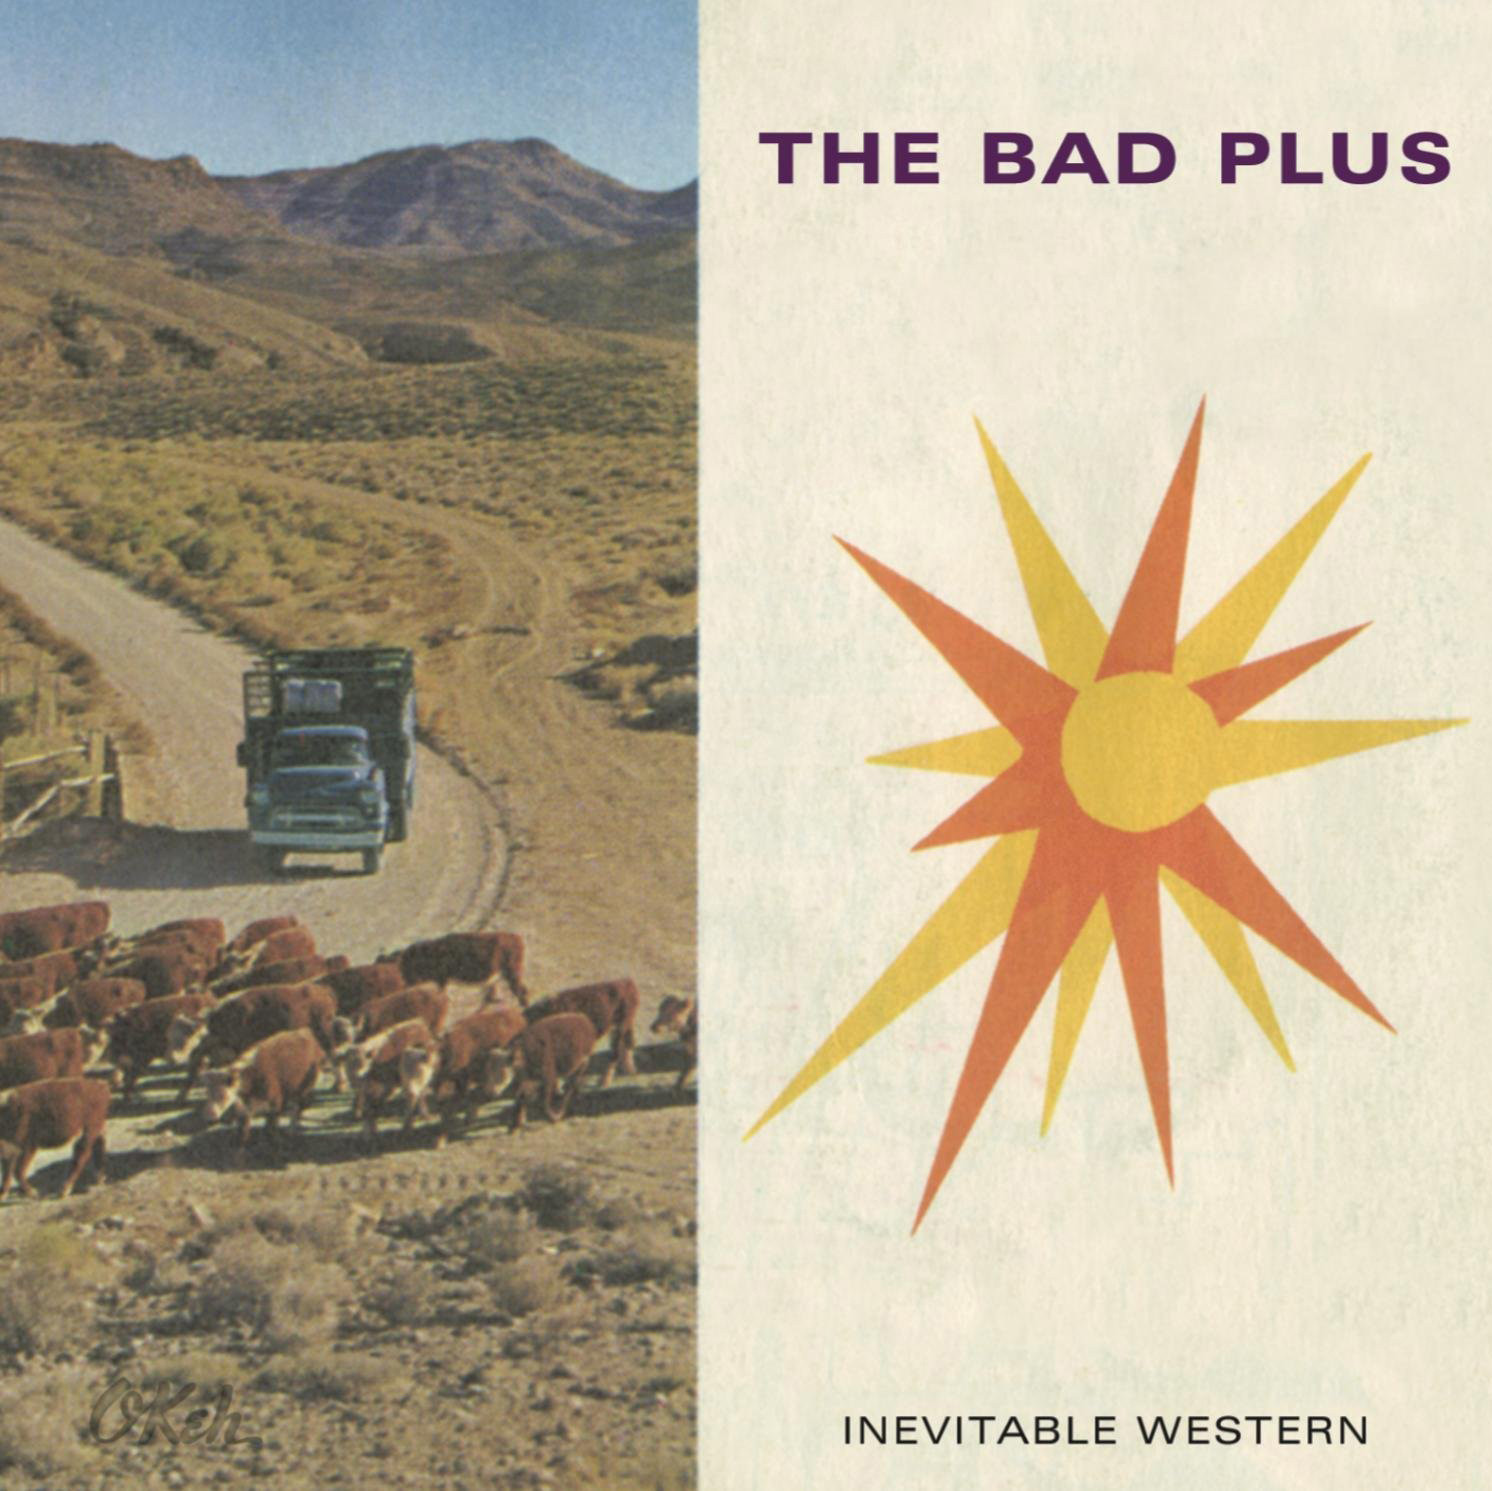 The Bad Plus - Inevitable Western (2014) [HDTracks FLAC 24bit/96kHz]